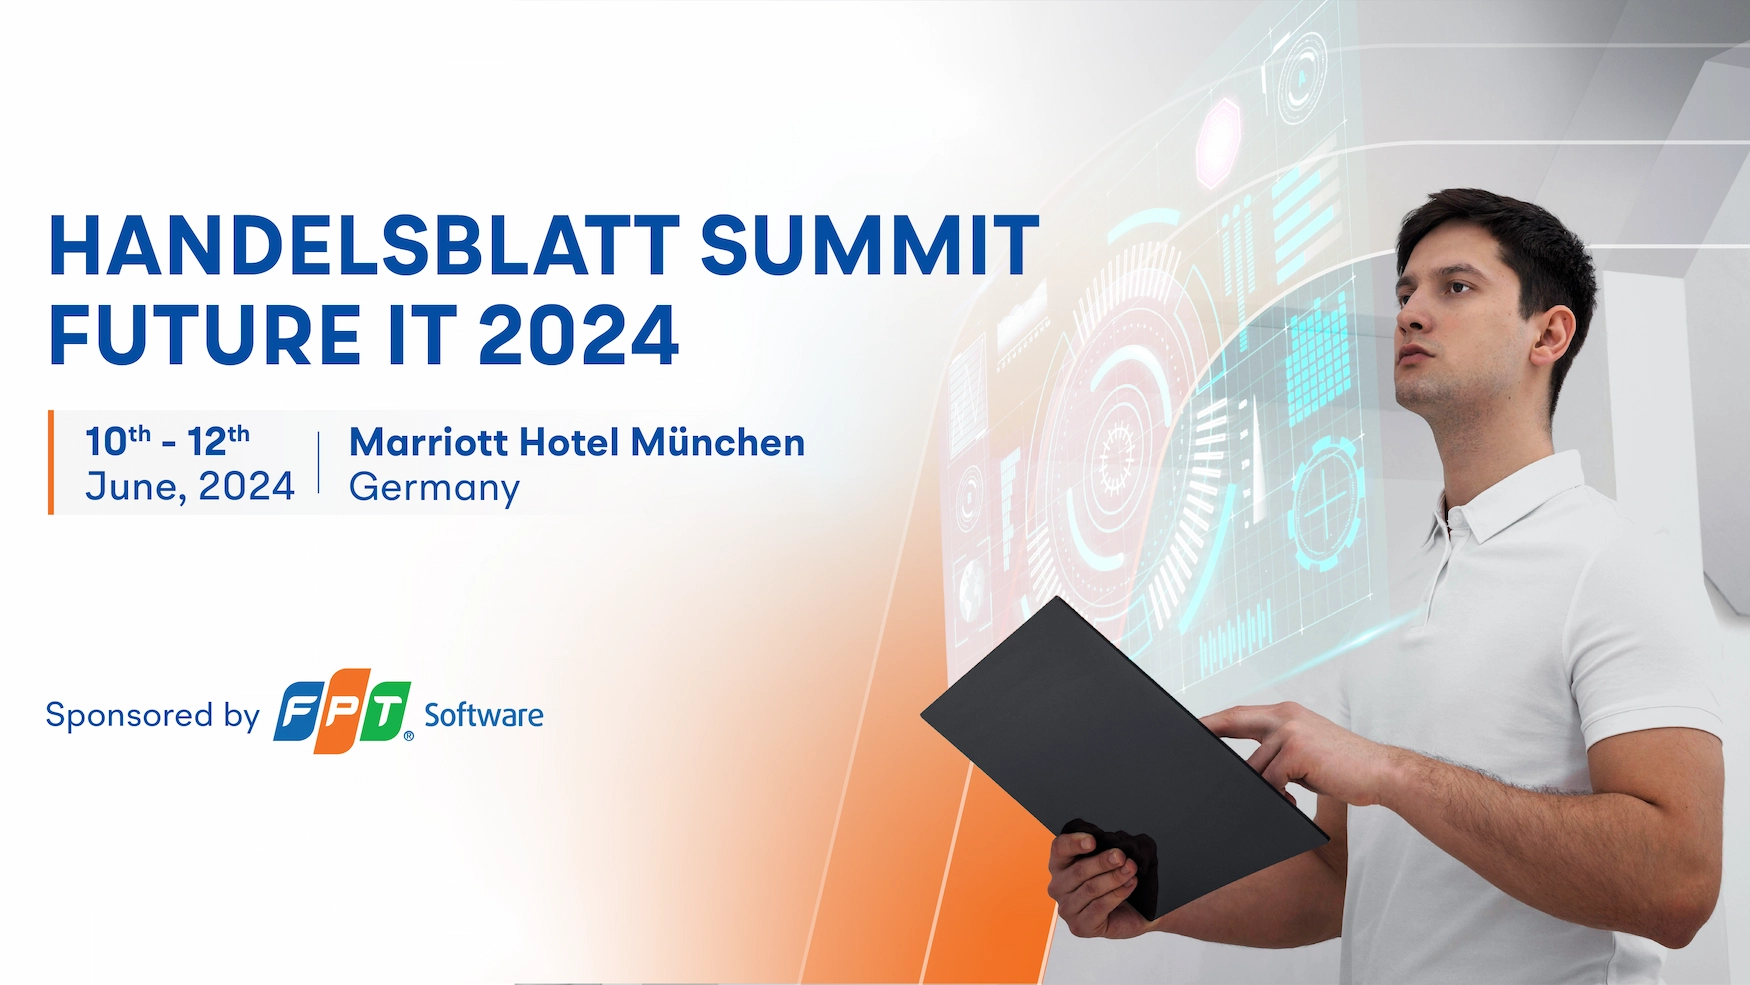 Handelsblatt Summit Future IT 2024